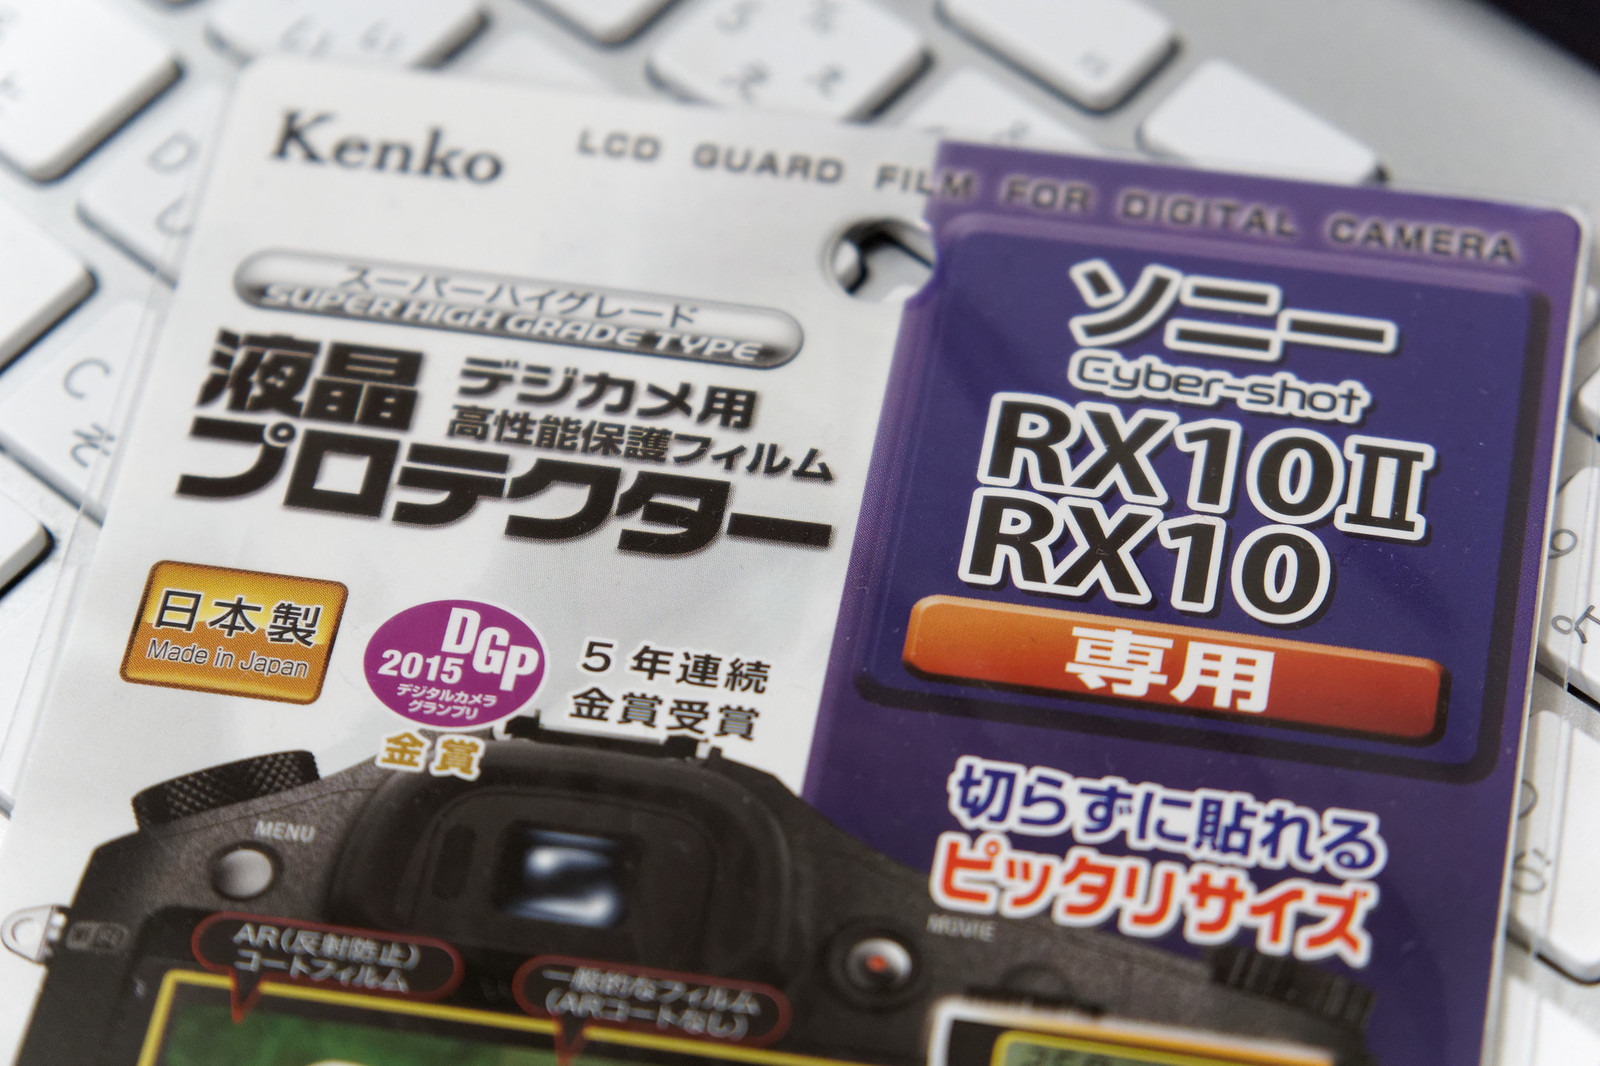 Kenko LCD Protection Film